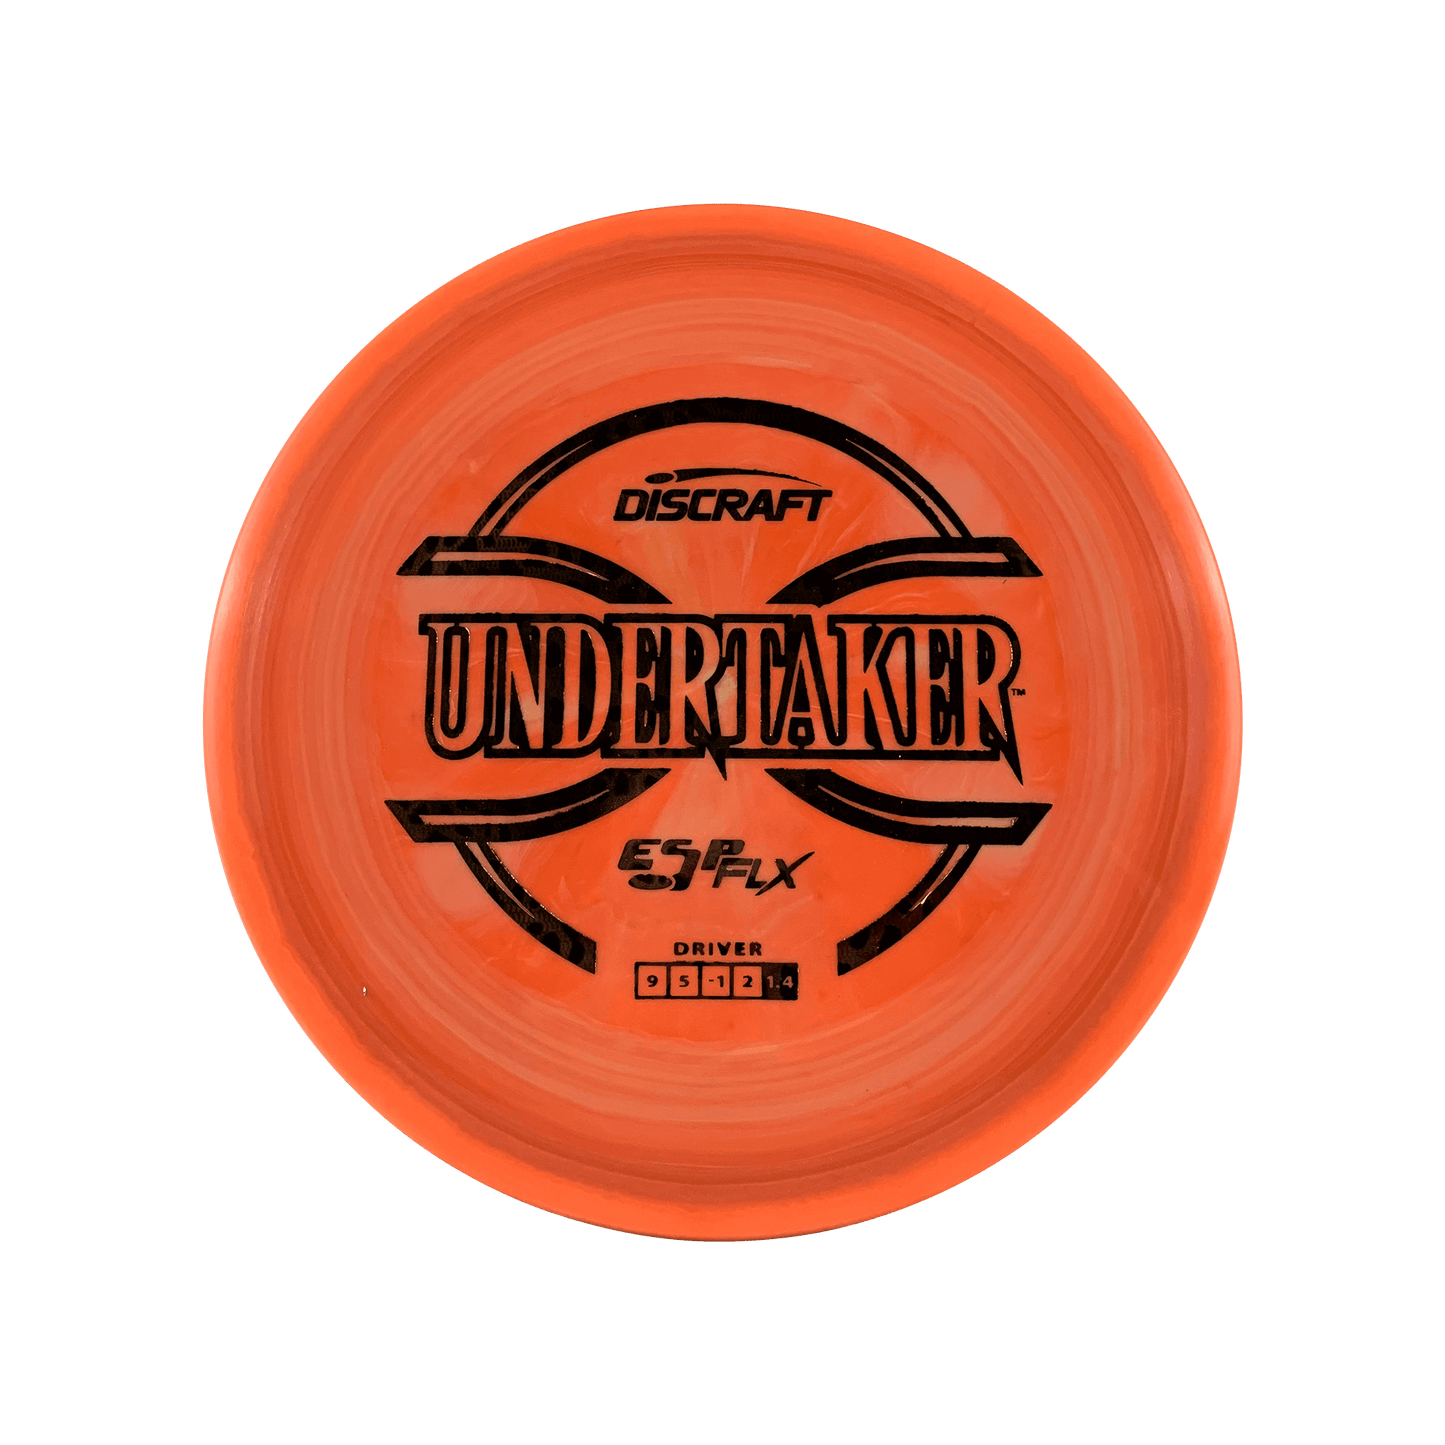 ESP FLX Undertaker Disc Discraft multi / orange 173 